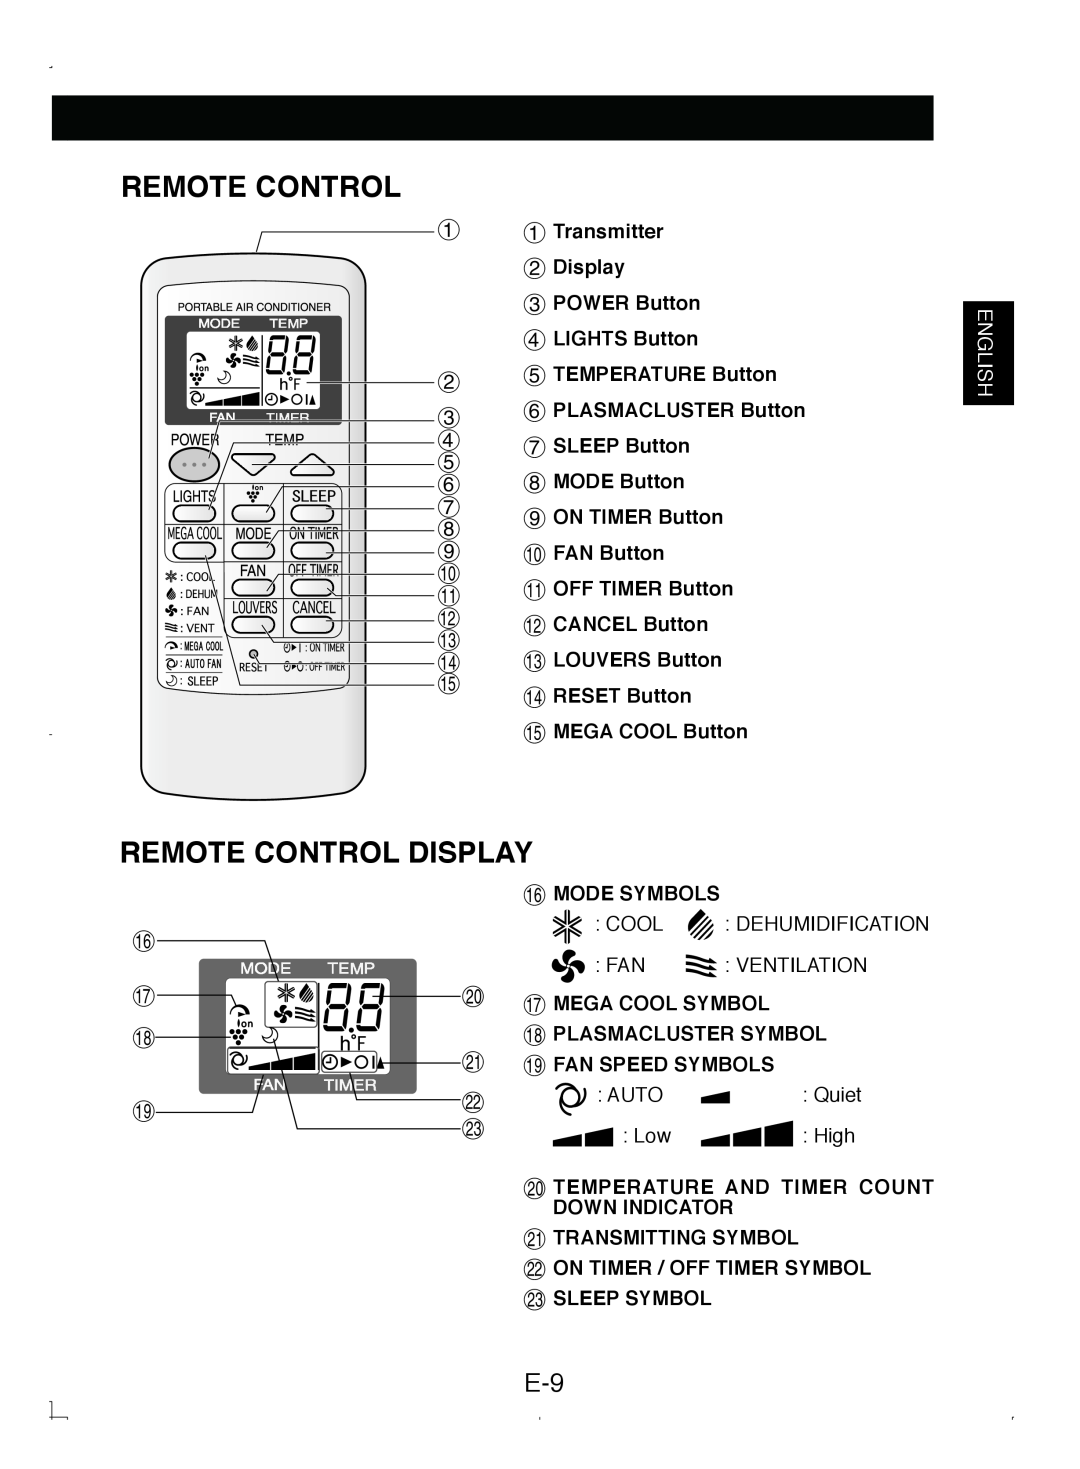 Sony CV-P12PX operation manual Remote Control Display, English 